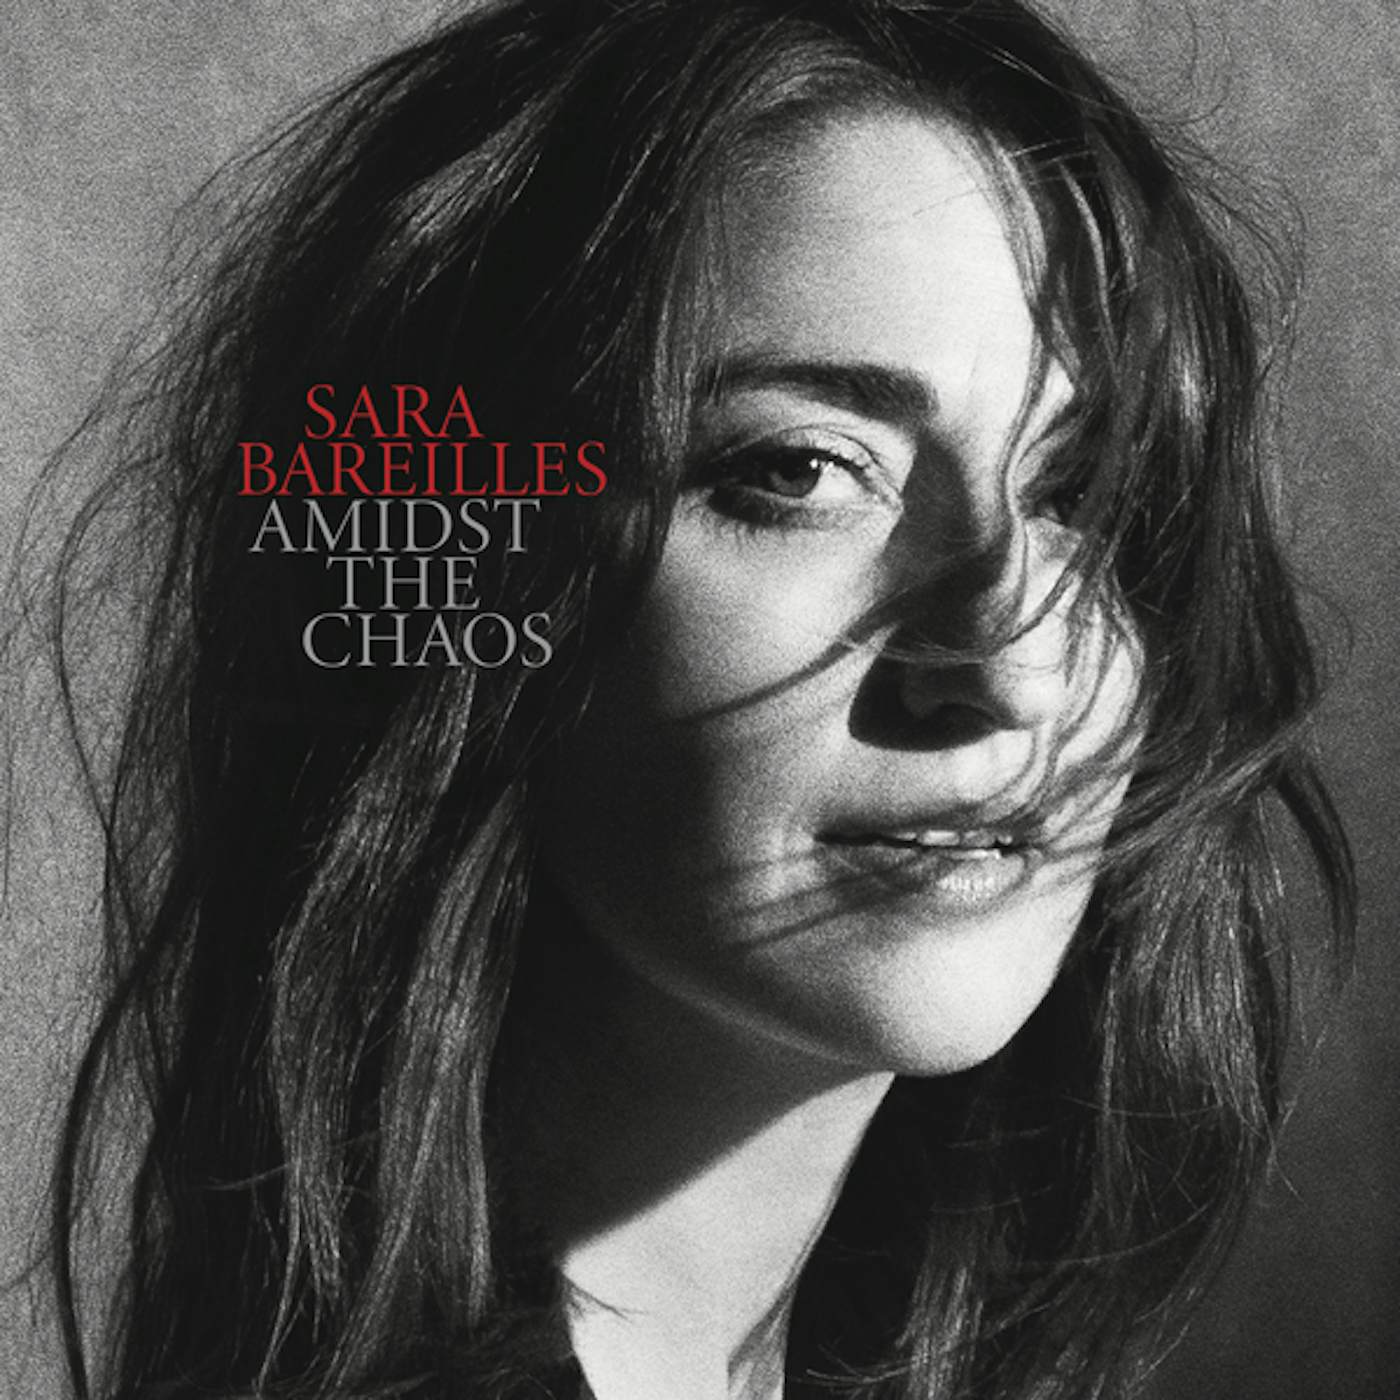 Sara Bareilles AMIDST THE CHAOS (2LP/150G/DL INSERT) Vinyl Record